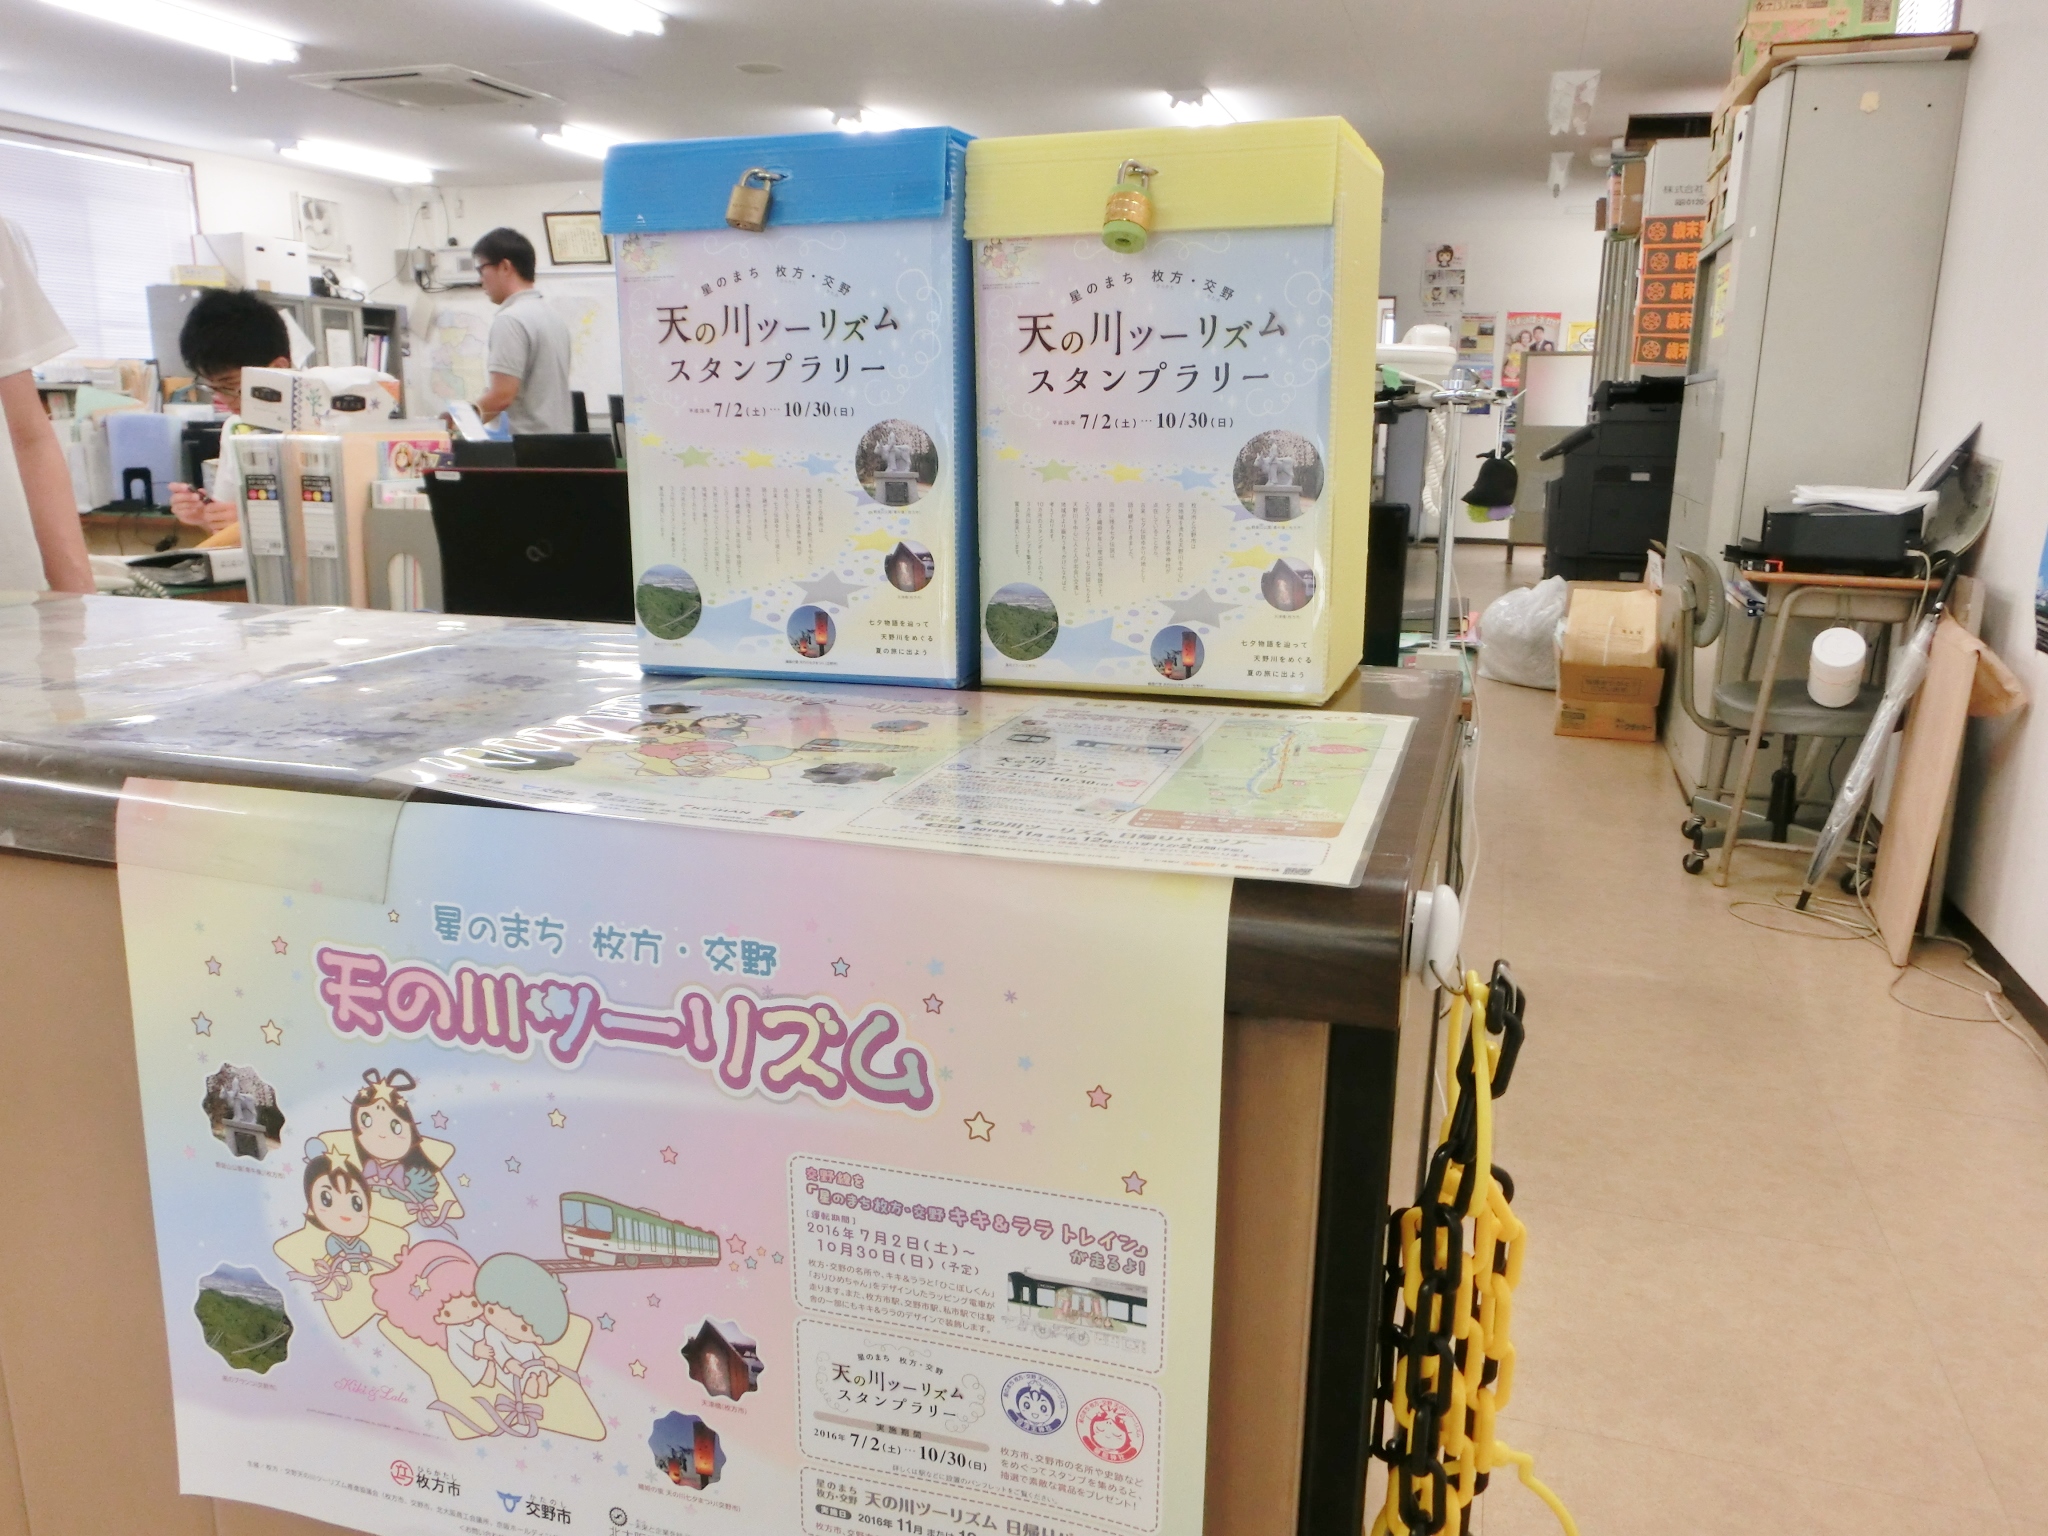 Katano Tourist Information Desk